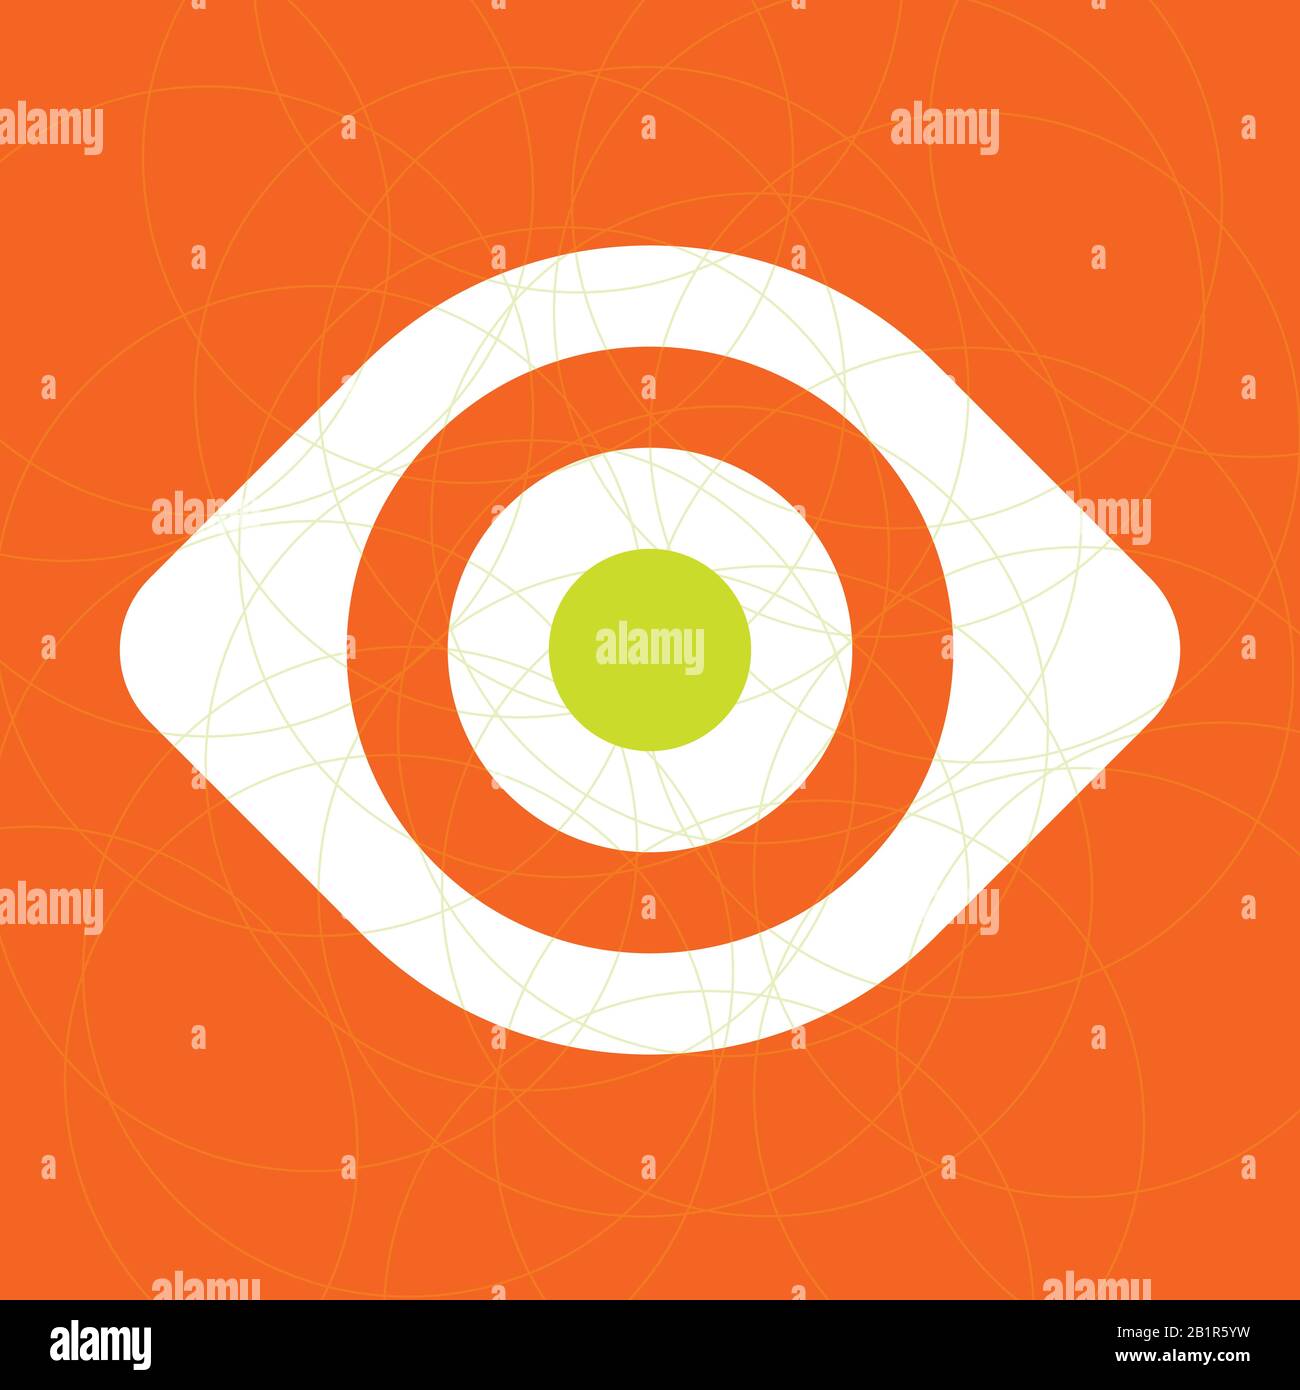 Simple eye icon on orange background. Stock Vector